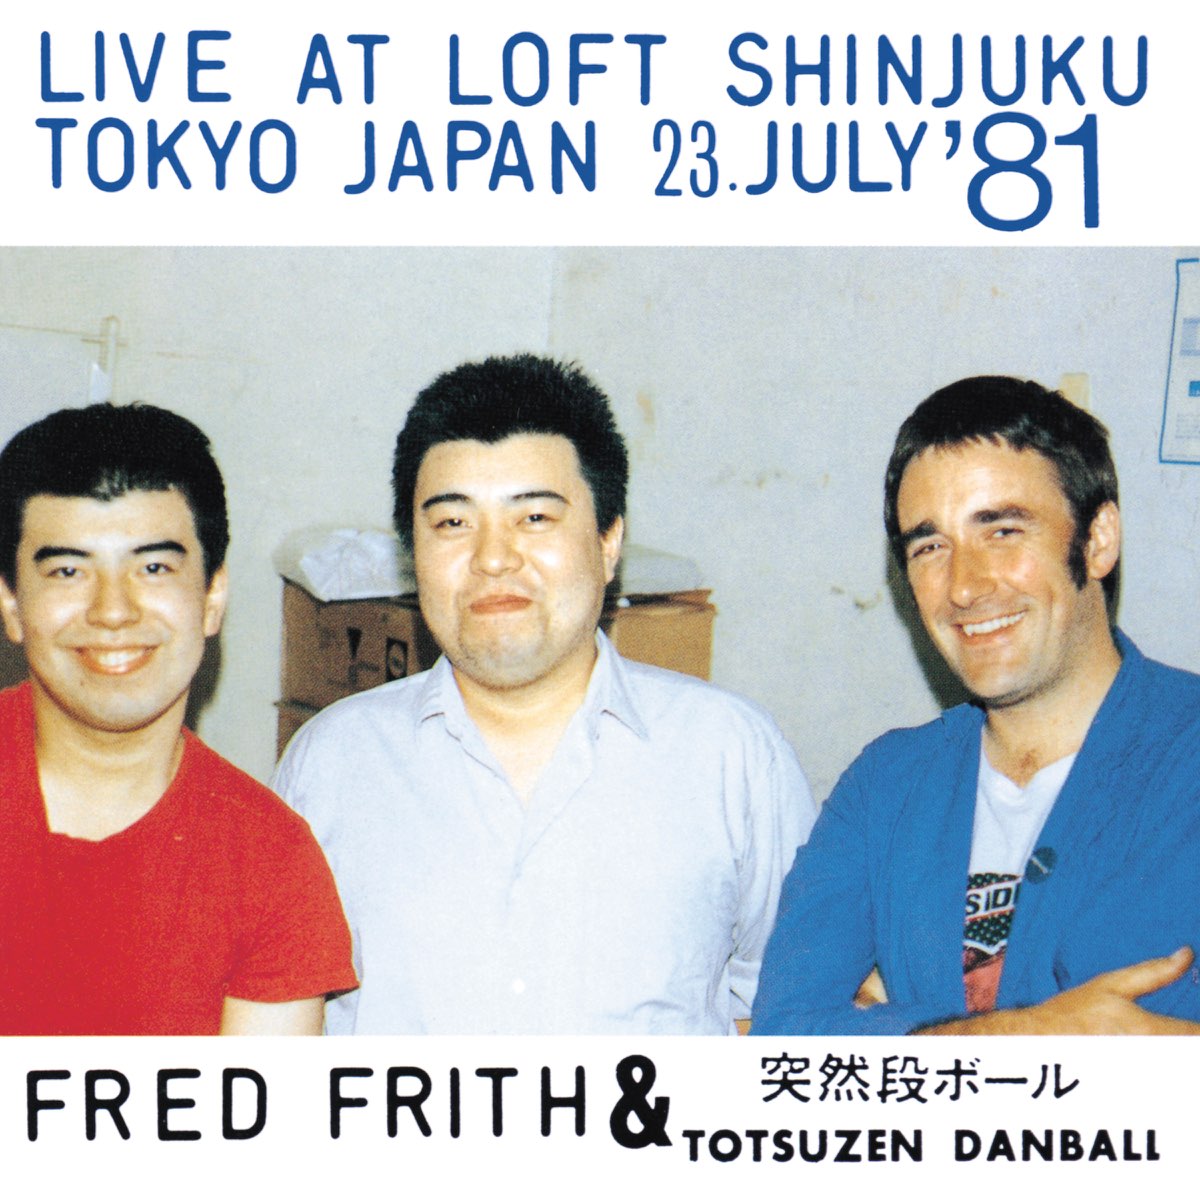 Fred Frith & Totsuzen Danball - Album by フレッド・フリス&突然